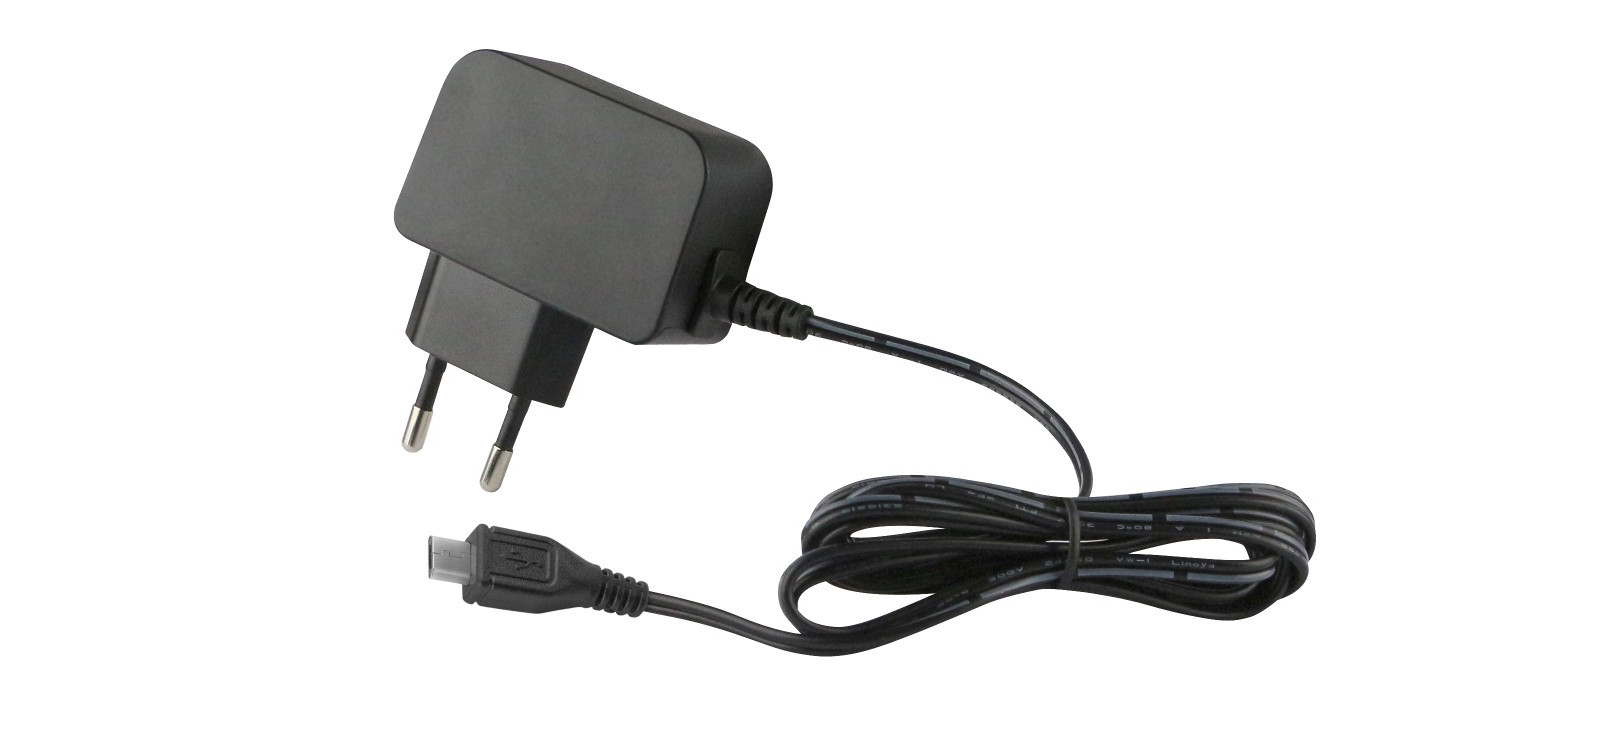 5V USB Micro Power Adapter